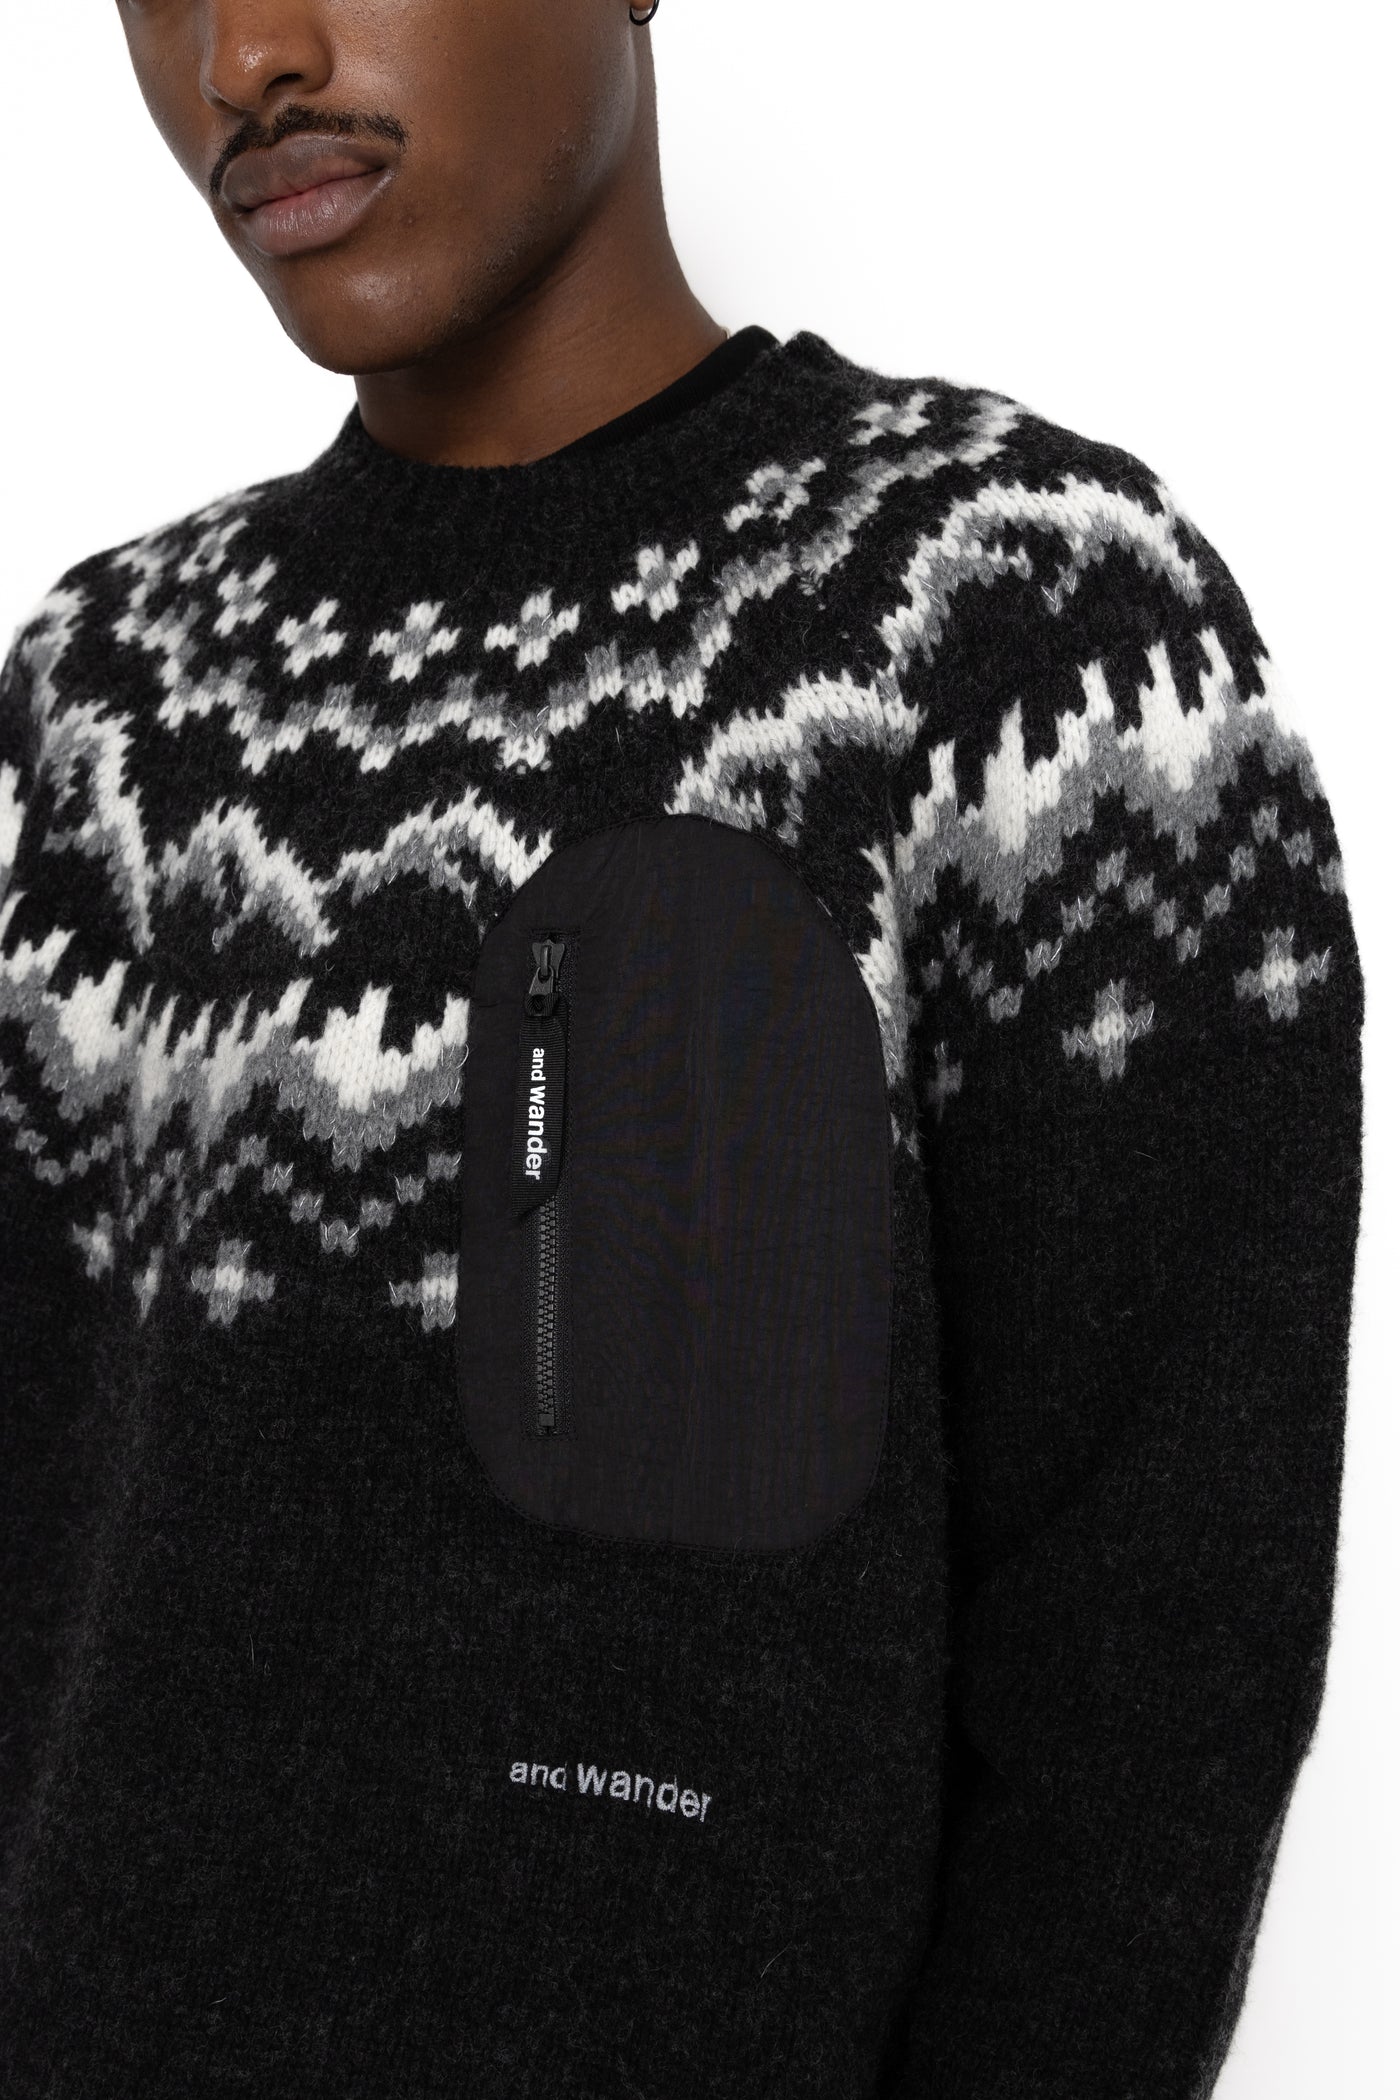 Lopi Knit Sweater - Black